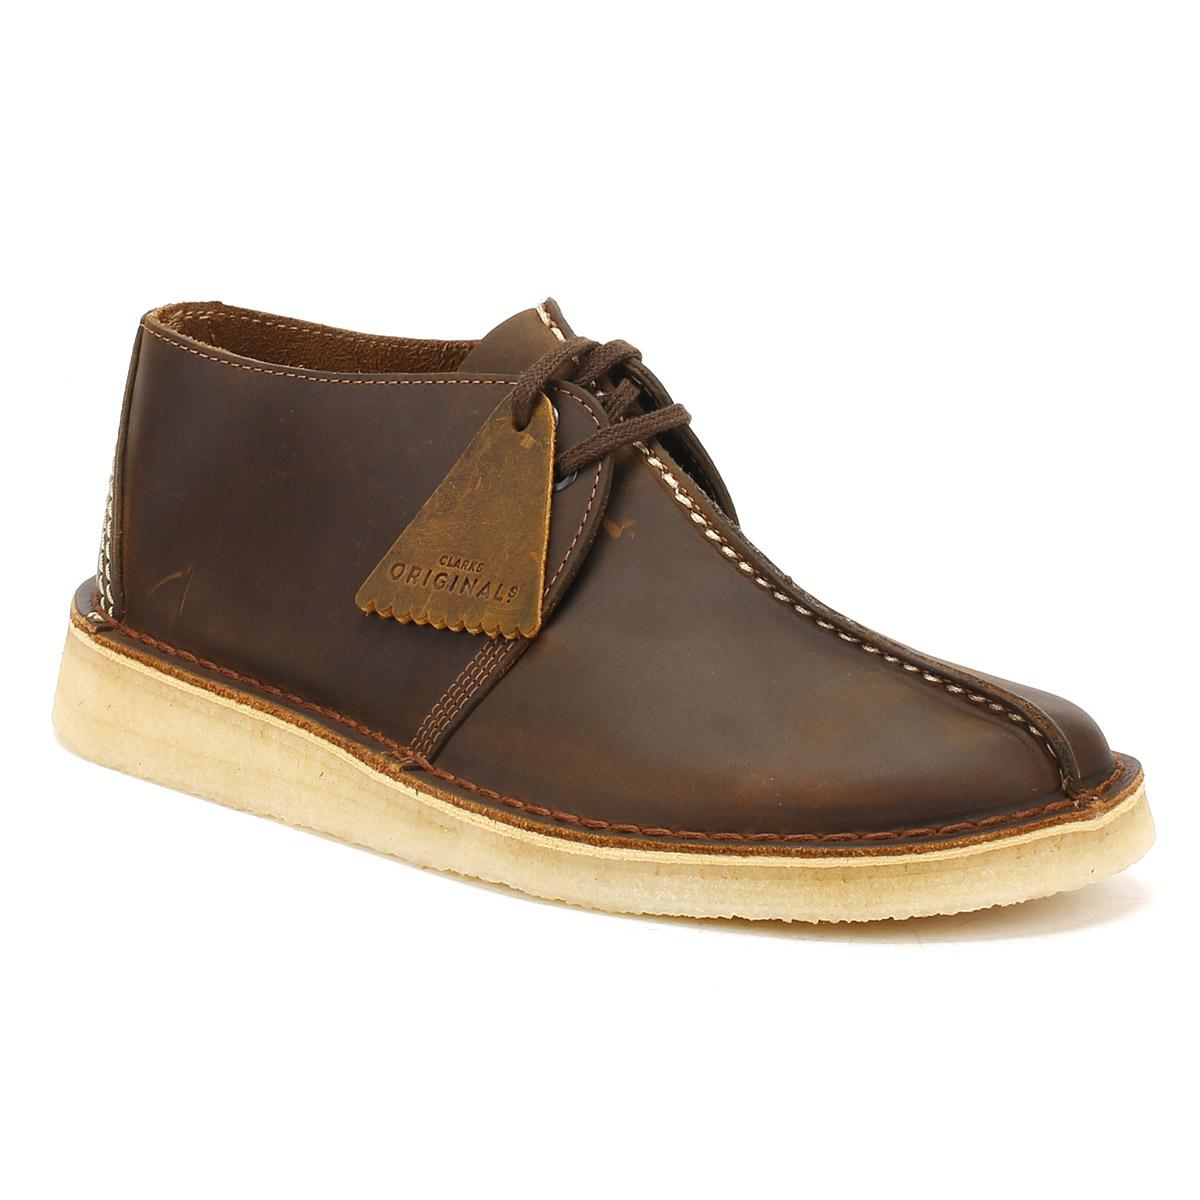 Clarks Mens Beeswax Leather Desert Trek Shoes in Brown for Men - Lyst